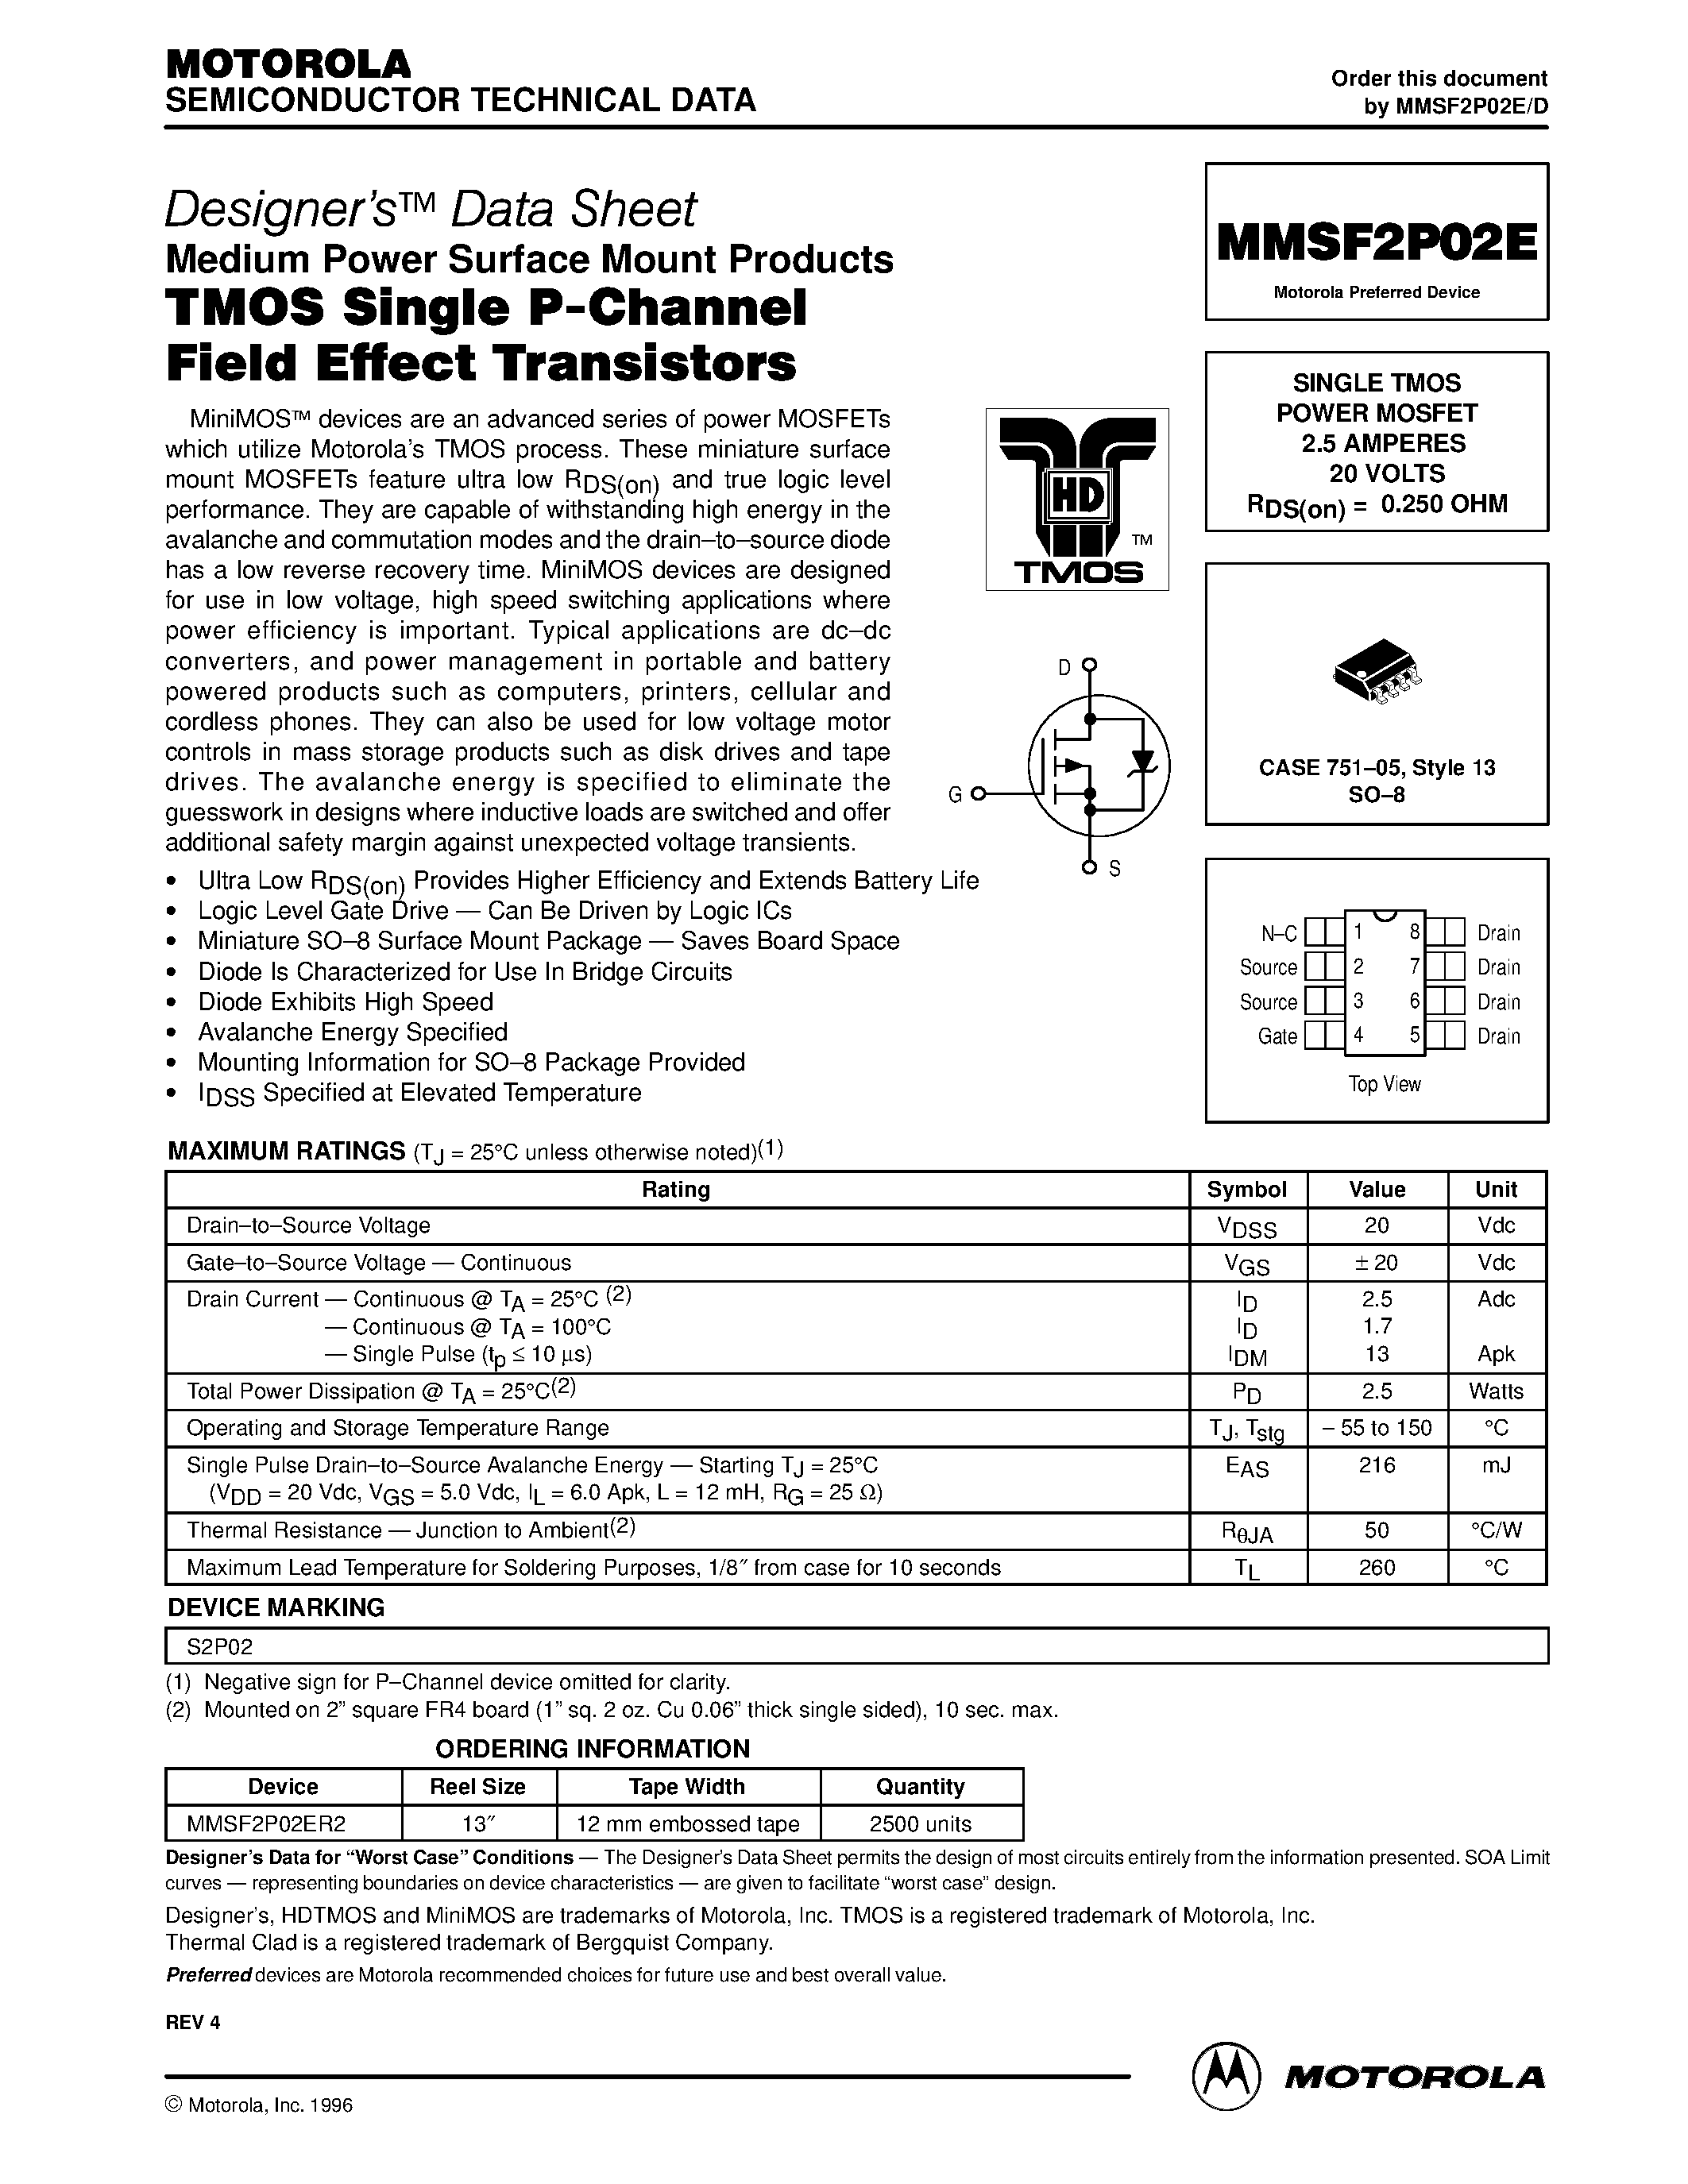 Даташит MMSF2P02E - SINGLE TMOS POWER MOSFET 2.5 AMPERES 20 VOLTS страница 1